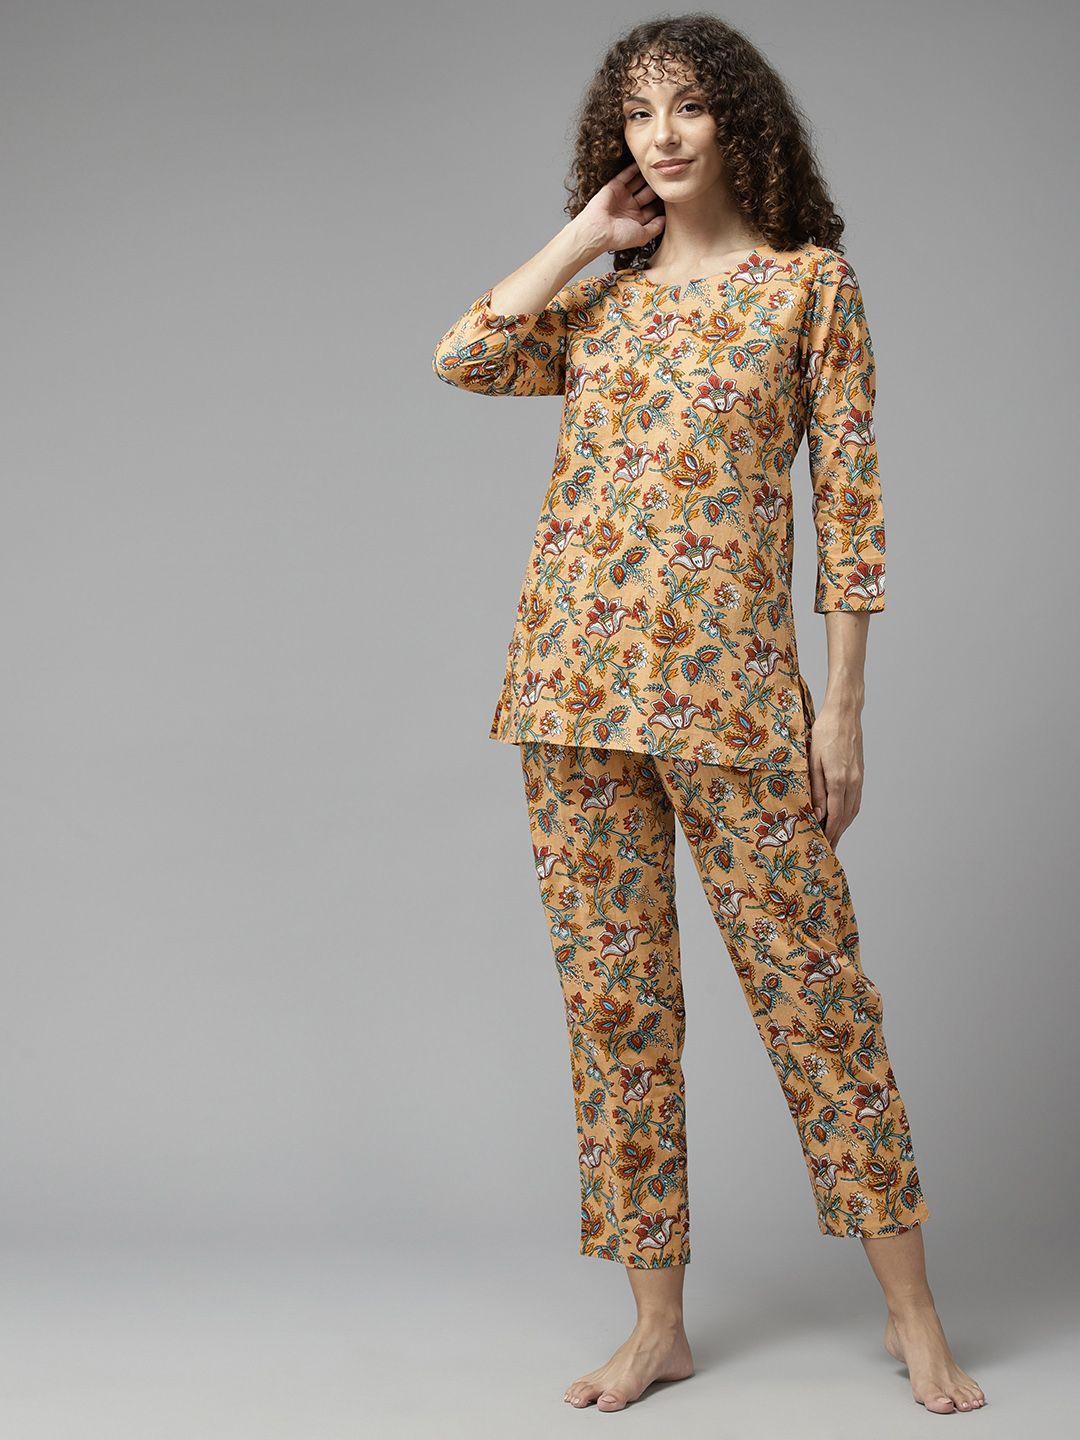 prakrti floral printed pure cotton night suit